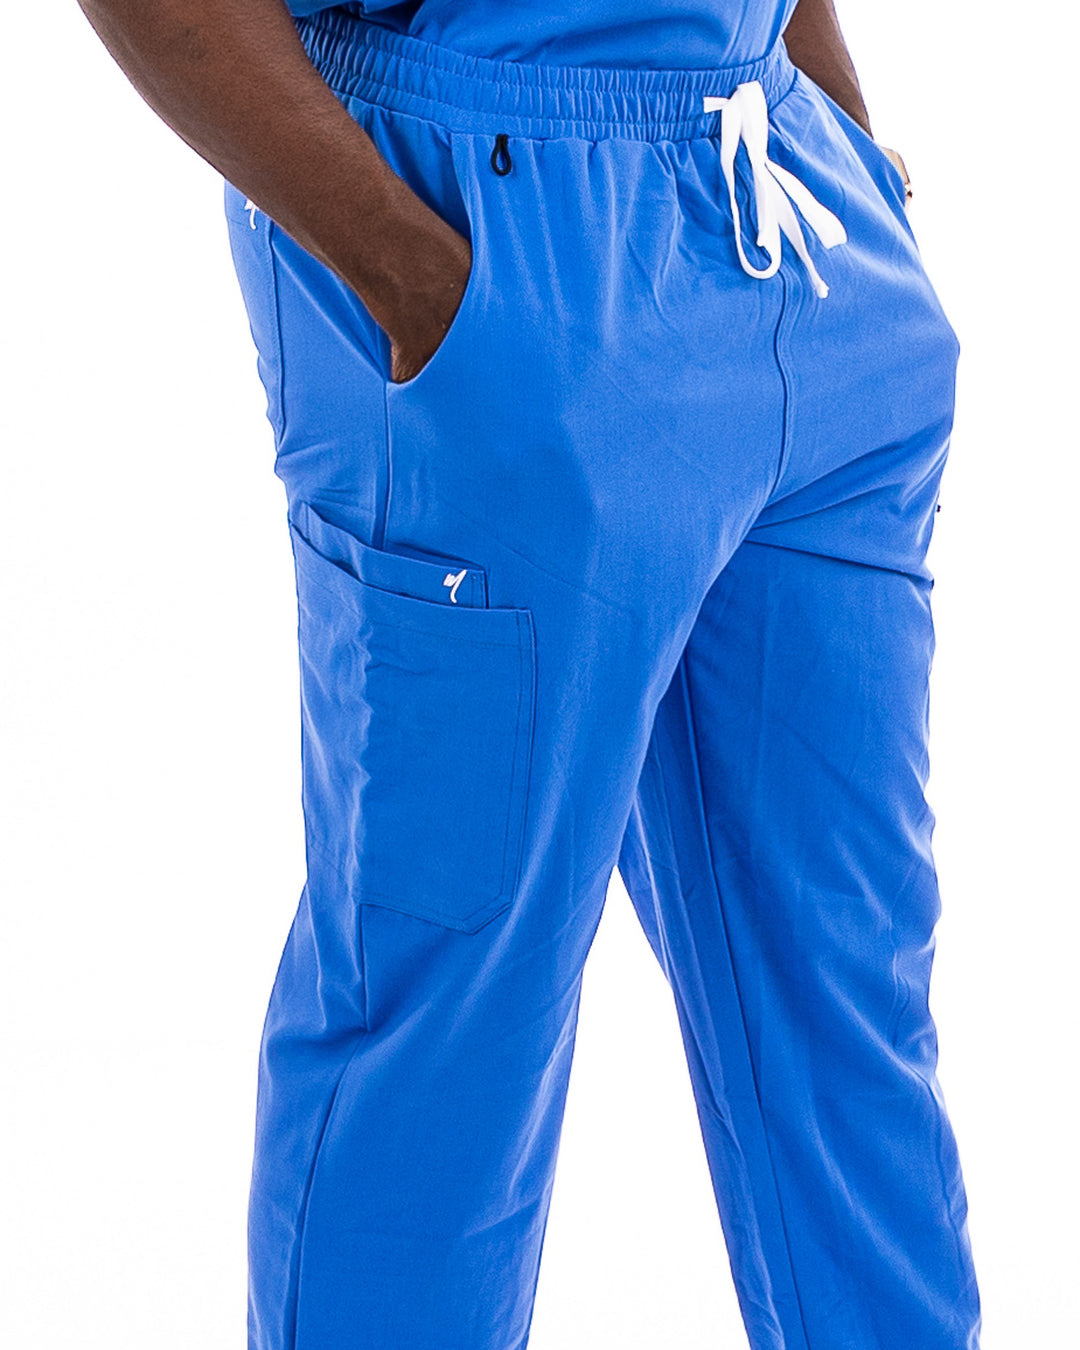 Men's Royal Blue Classic Scrub Pants – Mim Scrubs - Millennials In